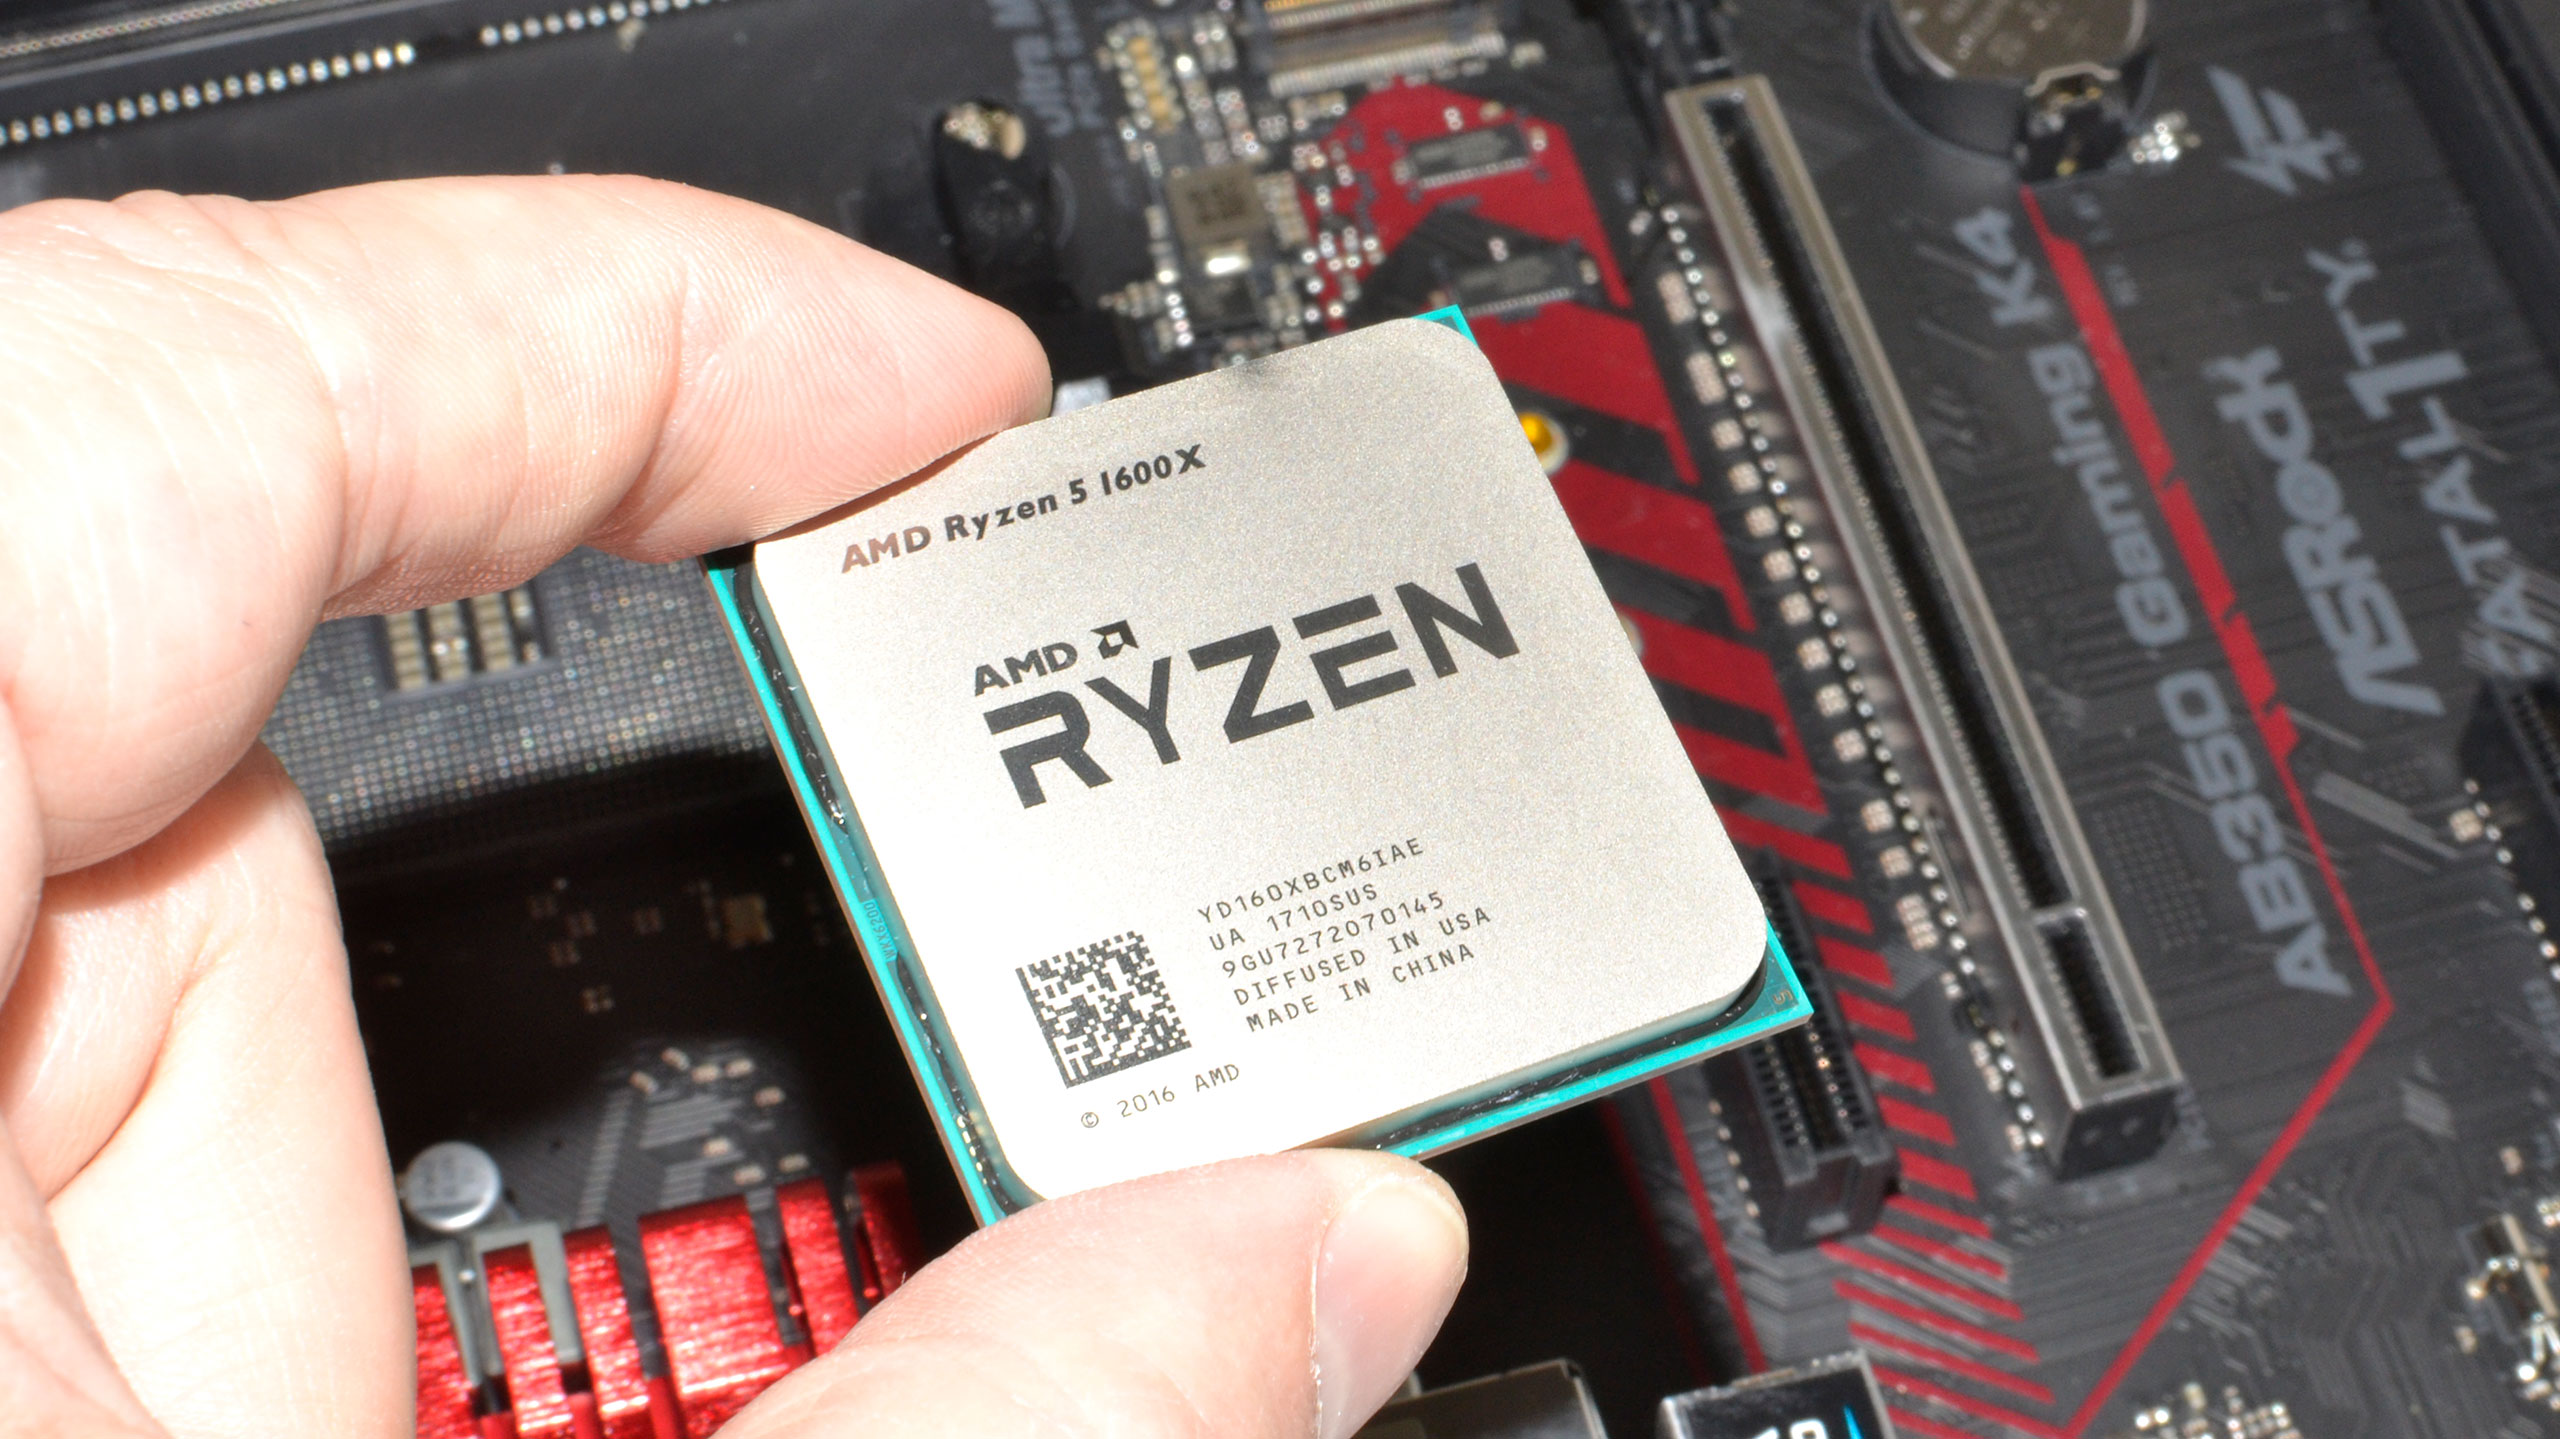 Amd ryzen сколько ядер. Ryzen 5 1600x. AMD 1600x. AMD Ryzen 5 1600. AMD Ryzen 5 1600 Six-Core Processor 3.20 GHZ.